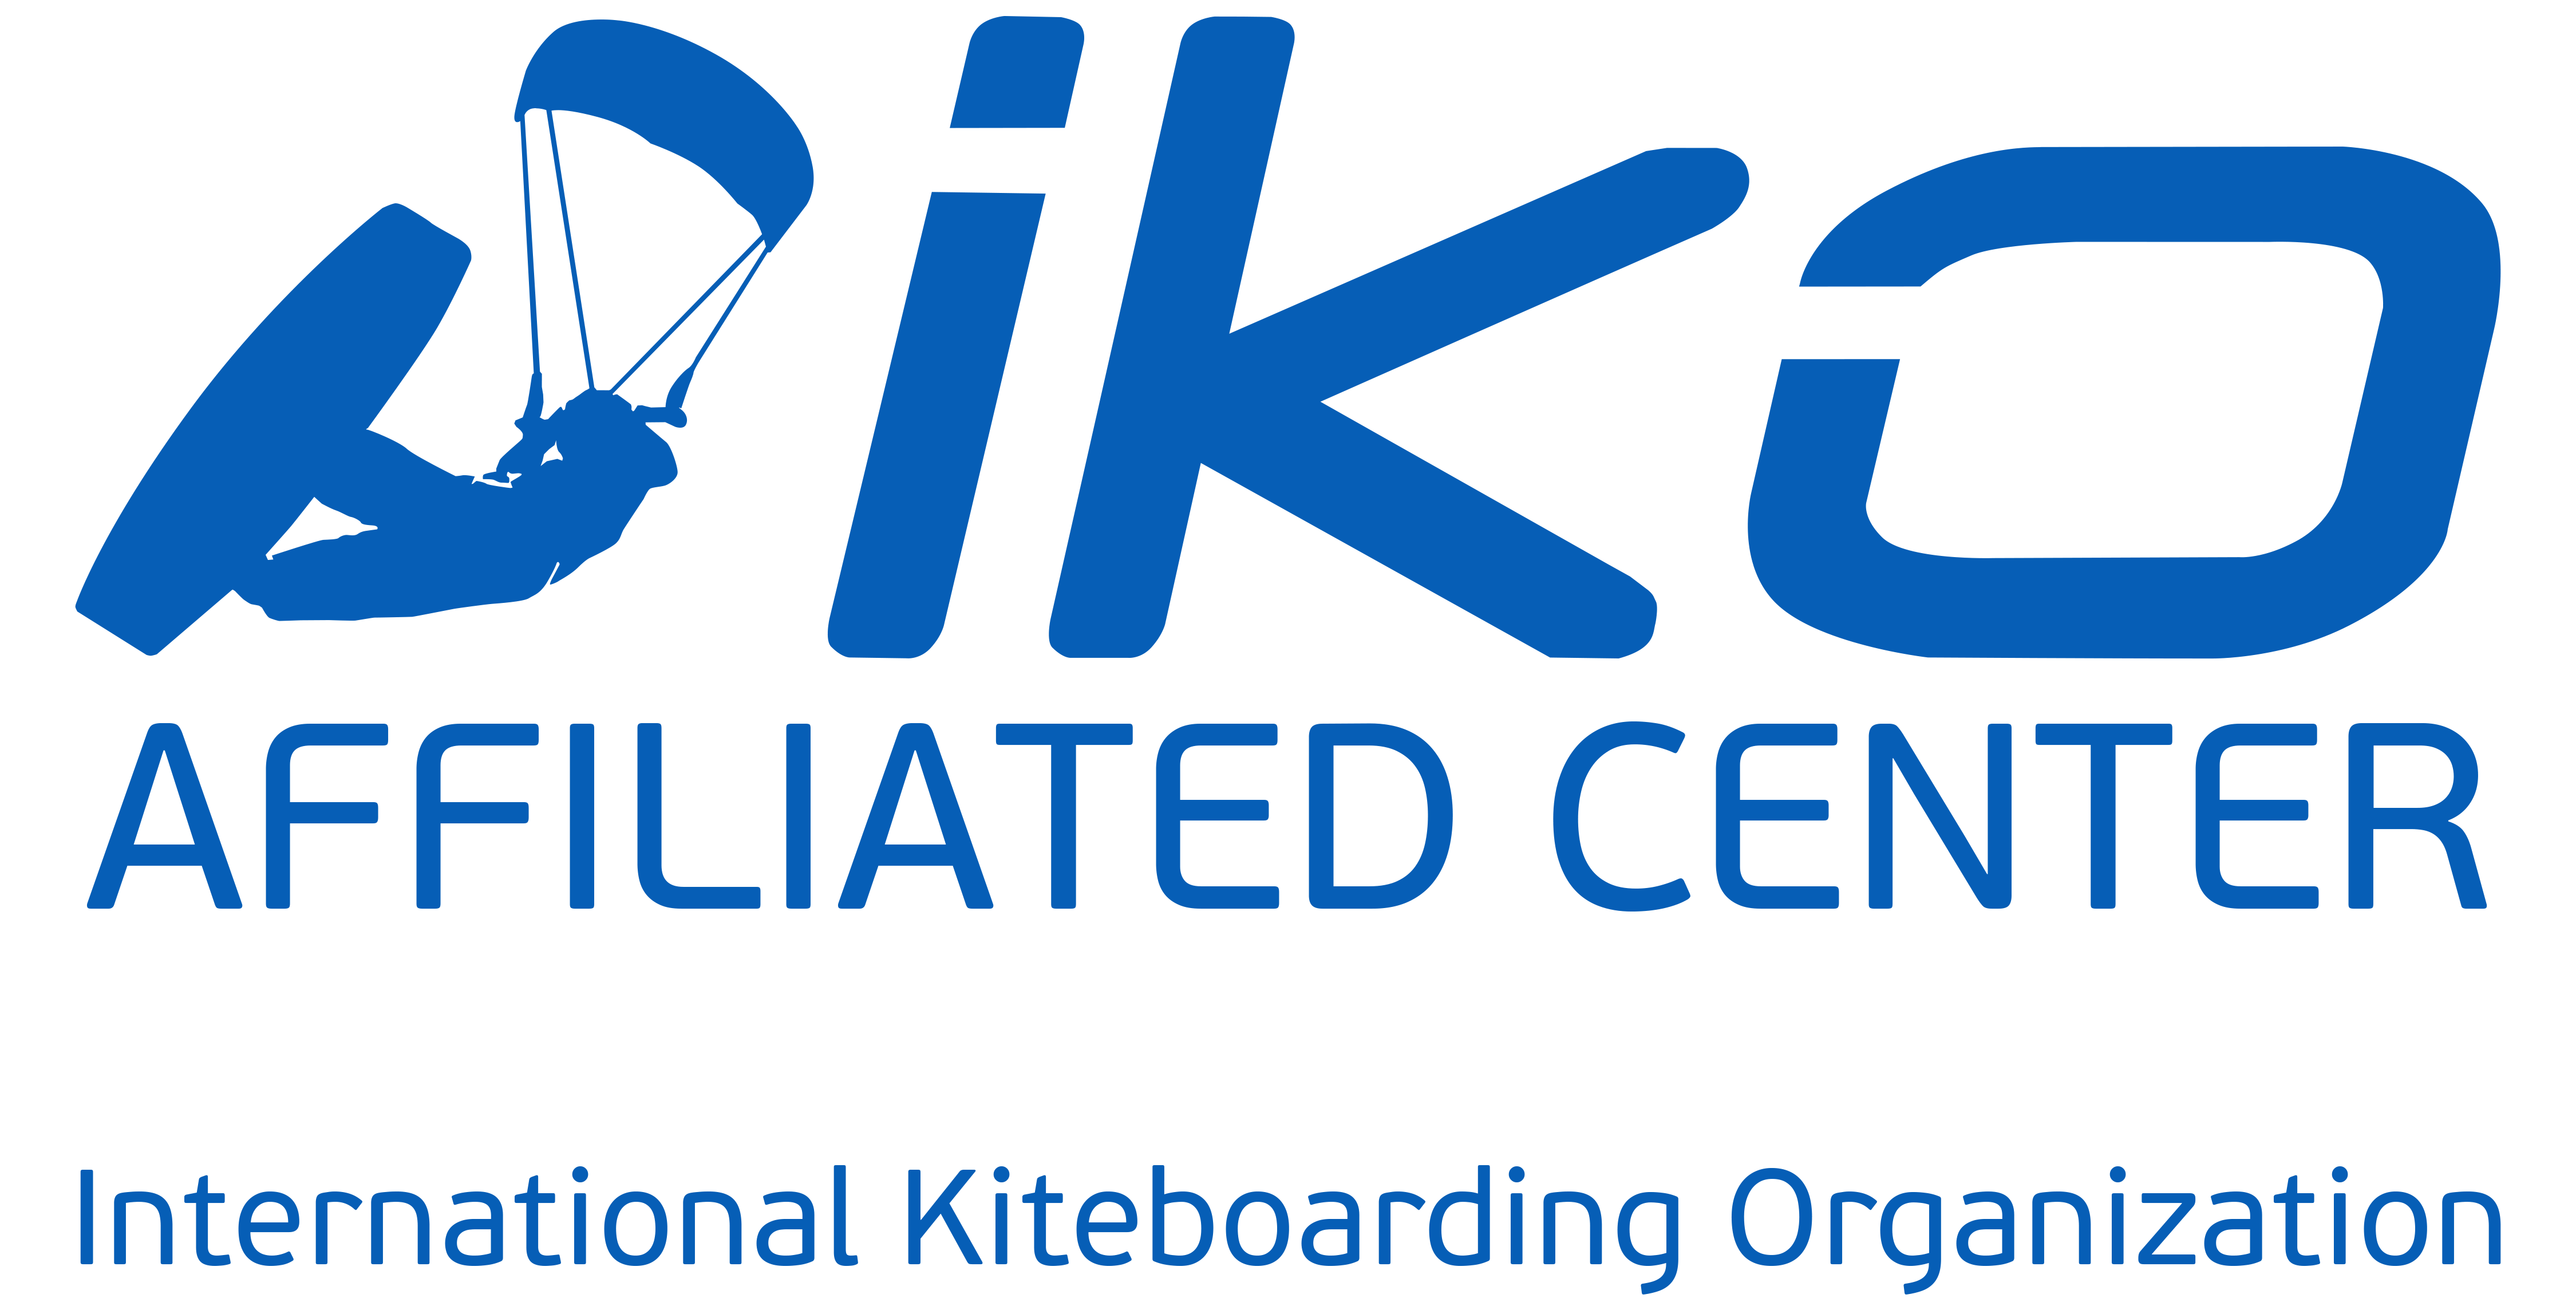 International kiteboarding organization